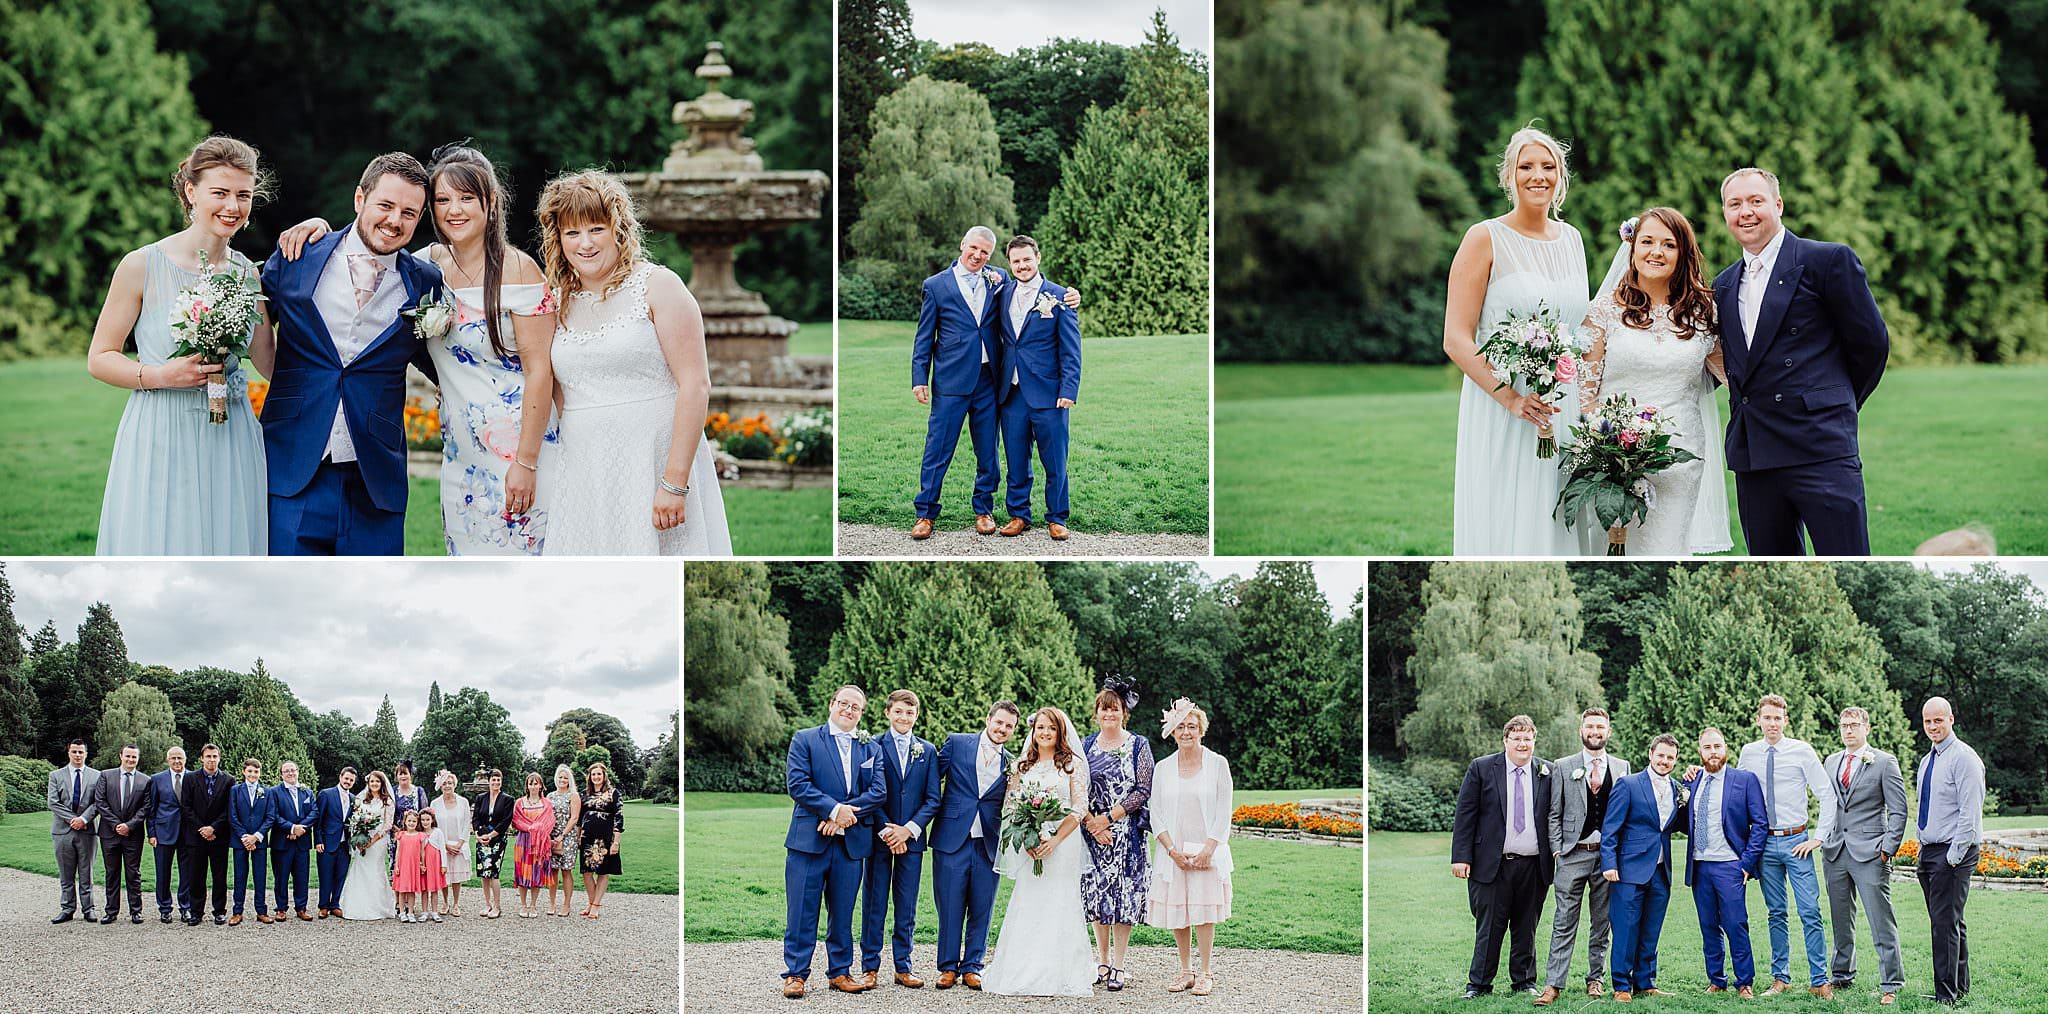 Family photos in the gardens of Gregnog Hall wedding venue